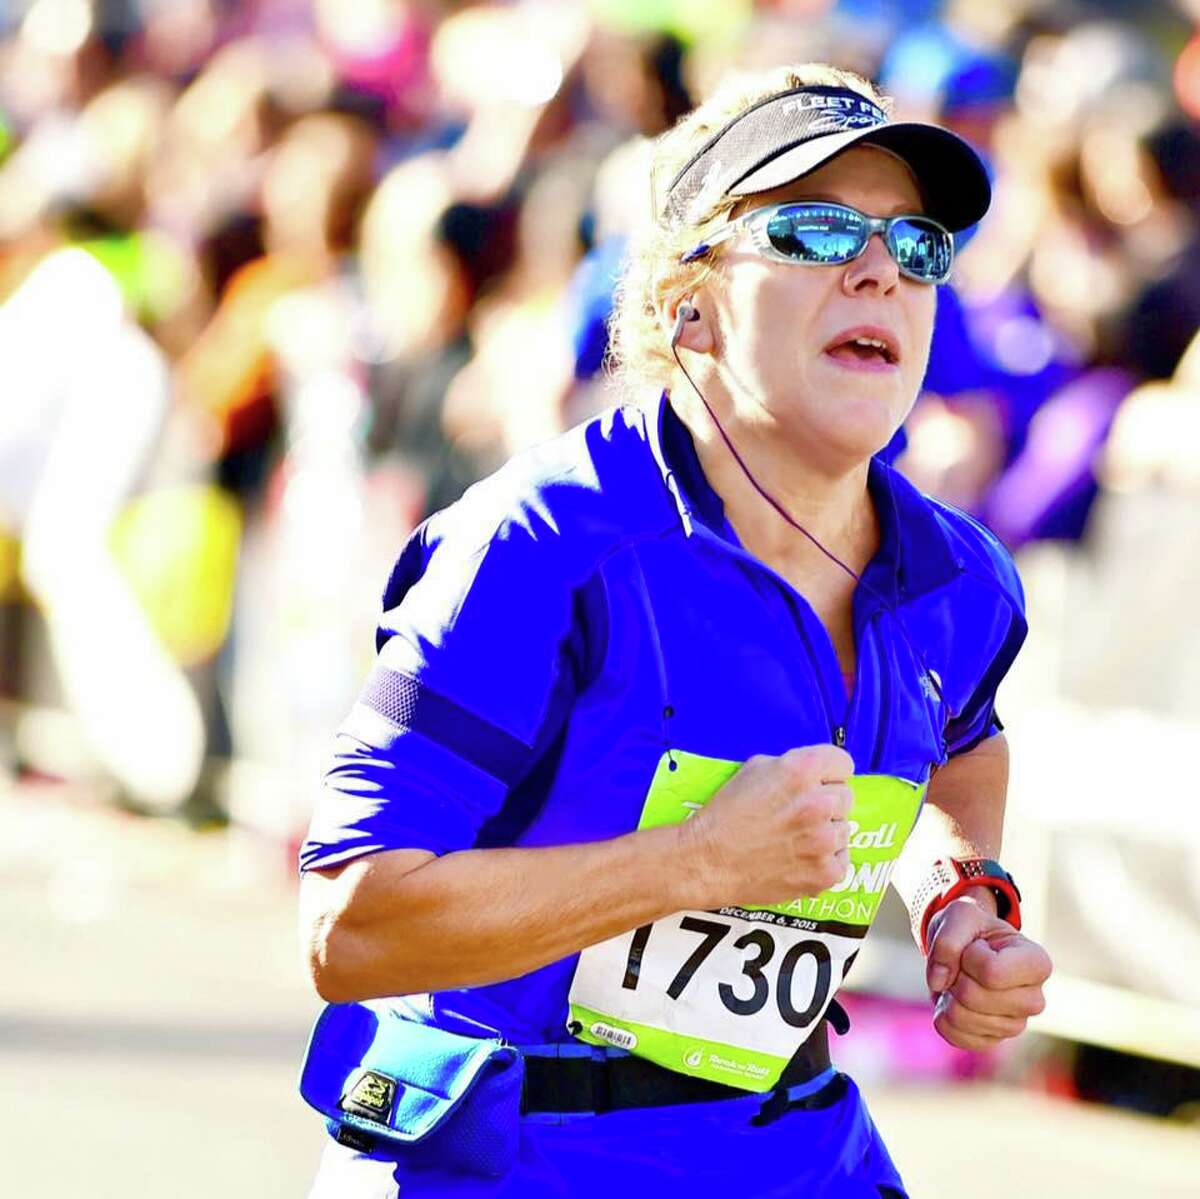 Tina Louise Booth Smith running in the 2015 Rock 'n' Roll San Antonio Half Marathon.